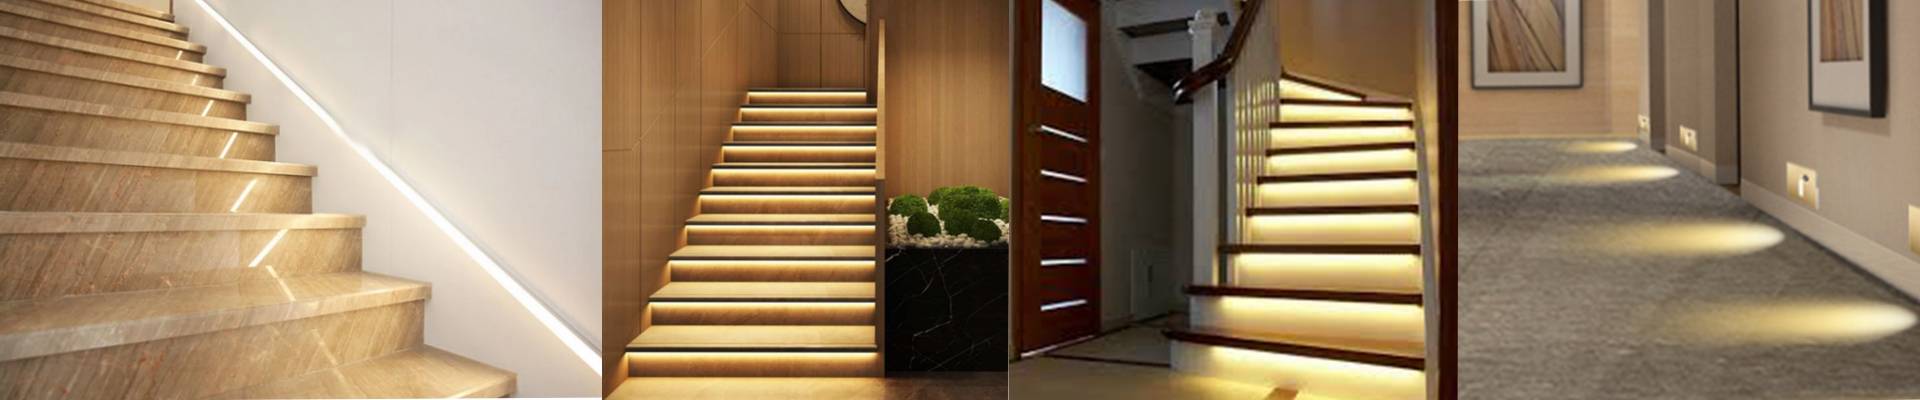 LED Stair Light & Wall Light